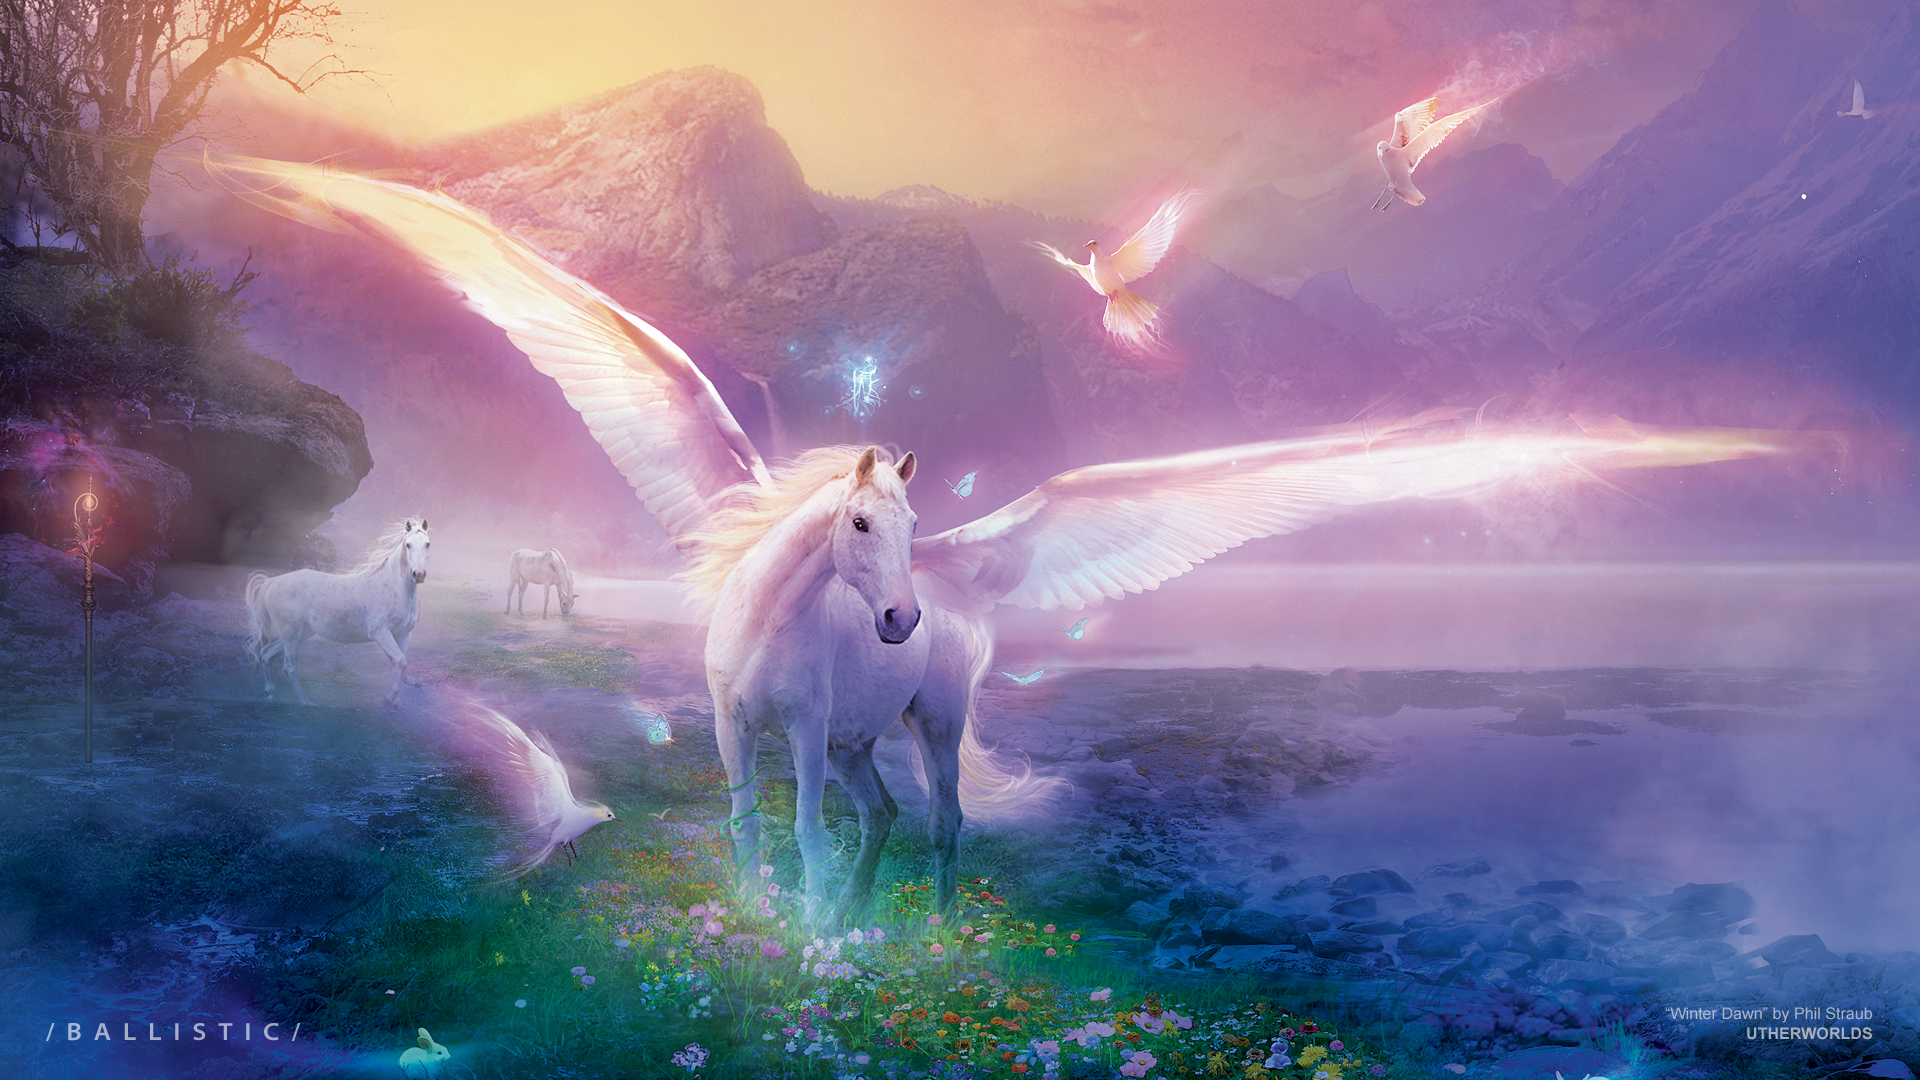 Pegasus Image HD Wallpaper And Background Photos